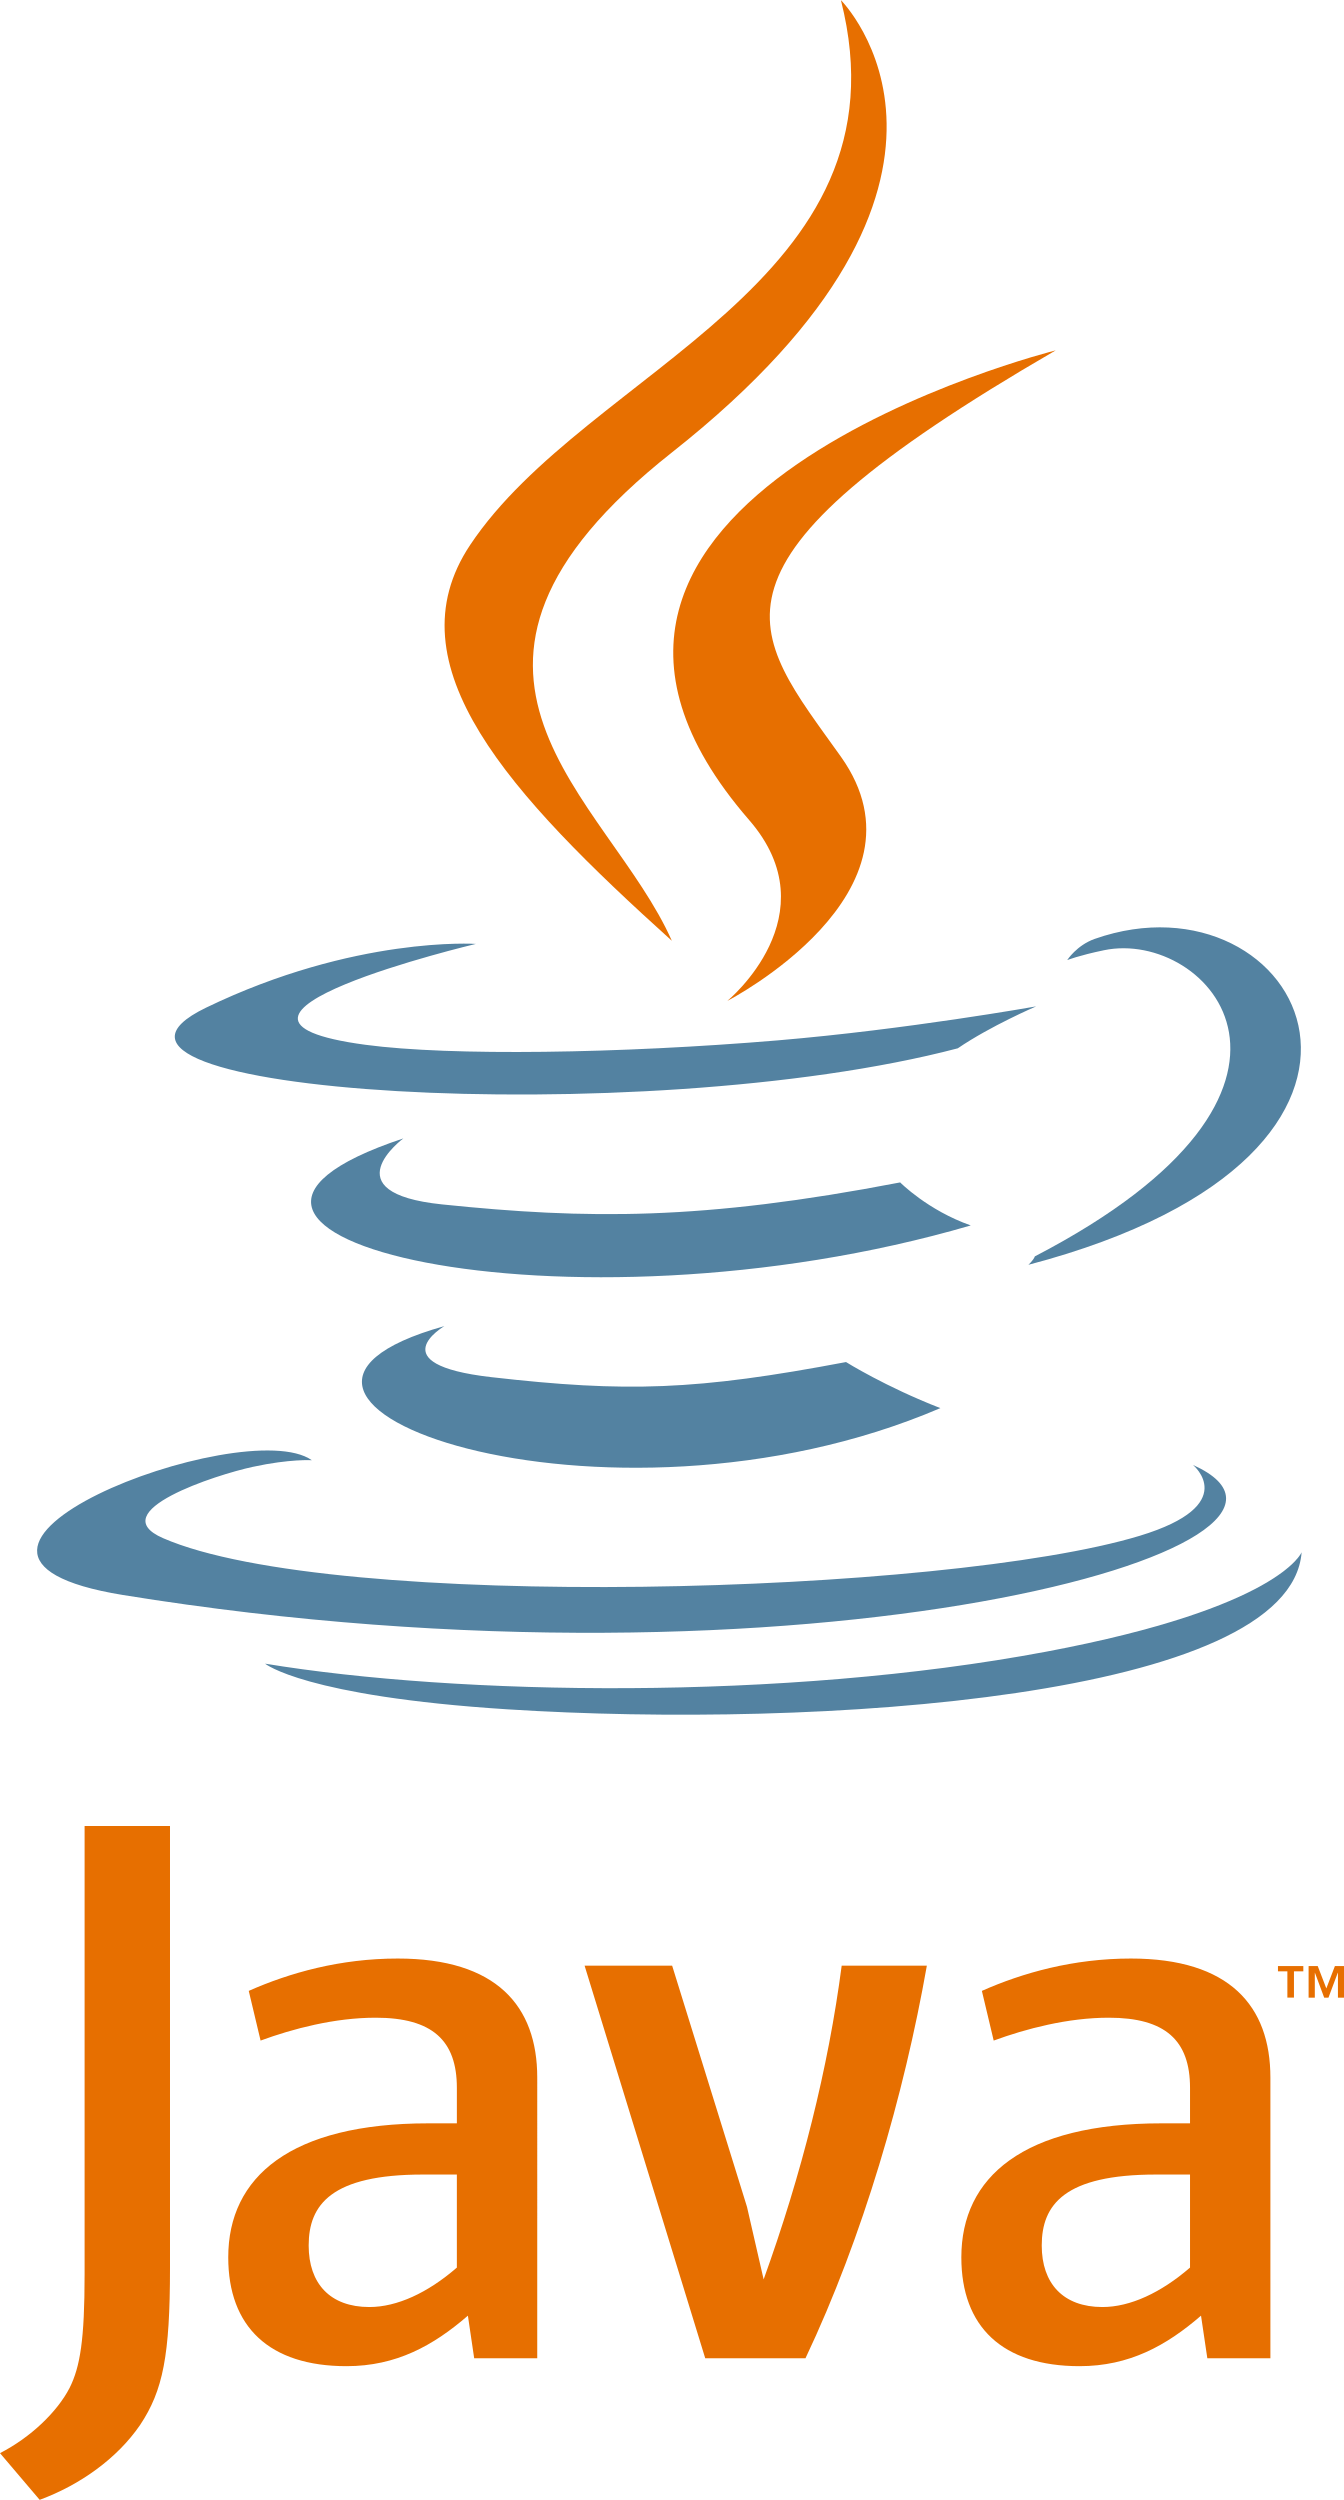 Duke – Java Mascot logo colors